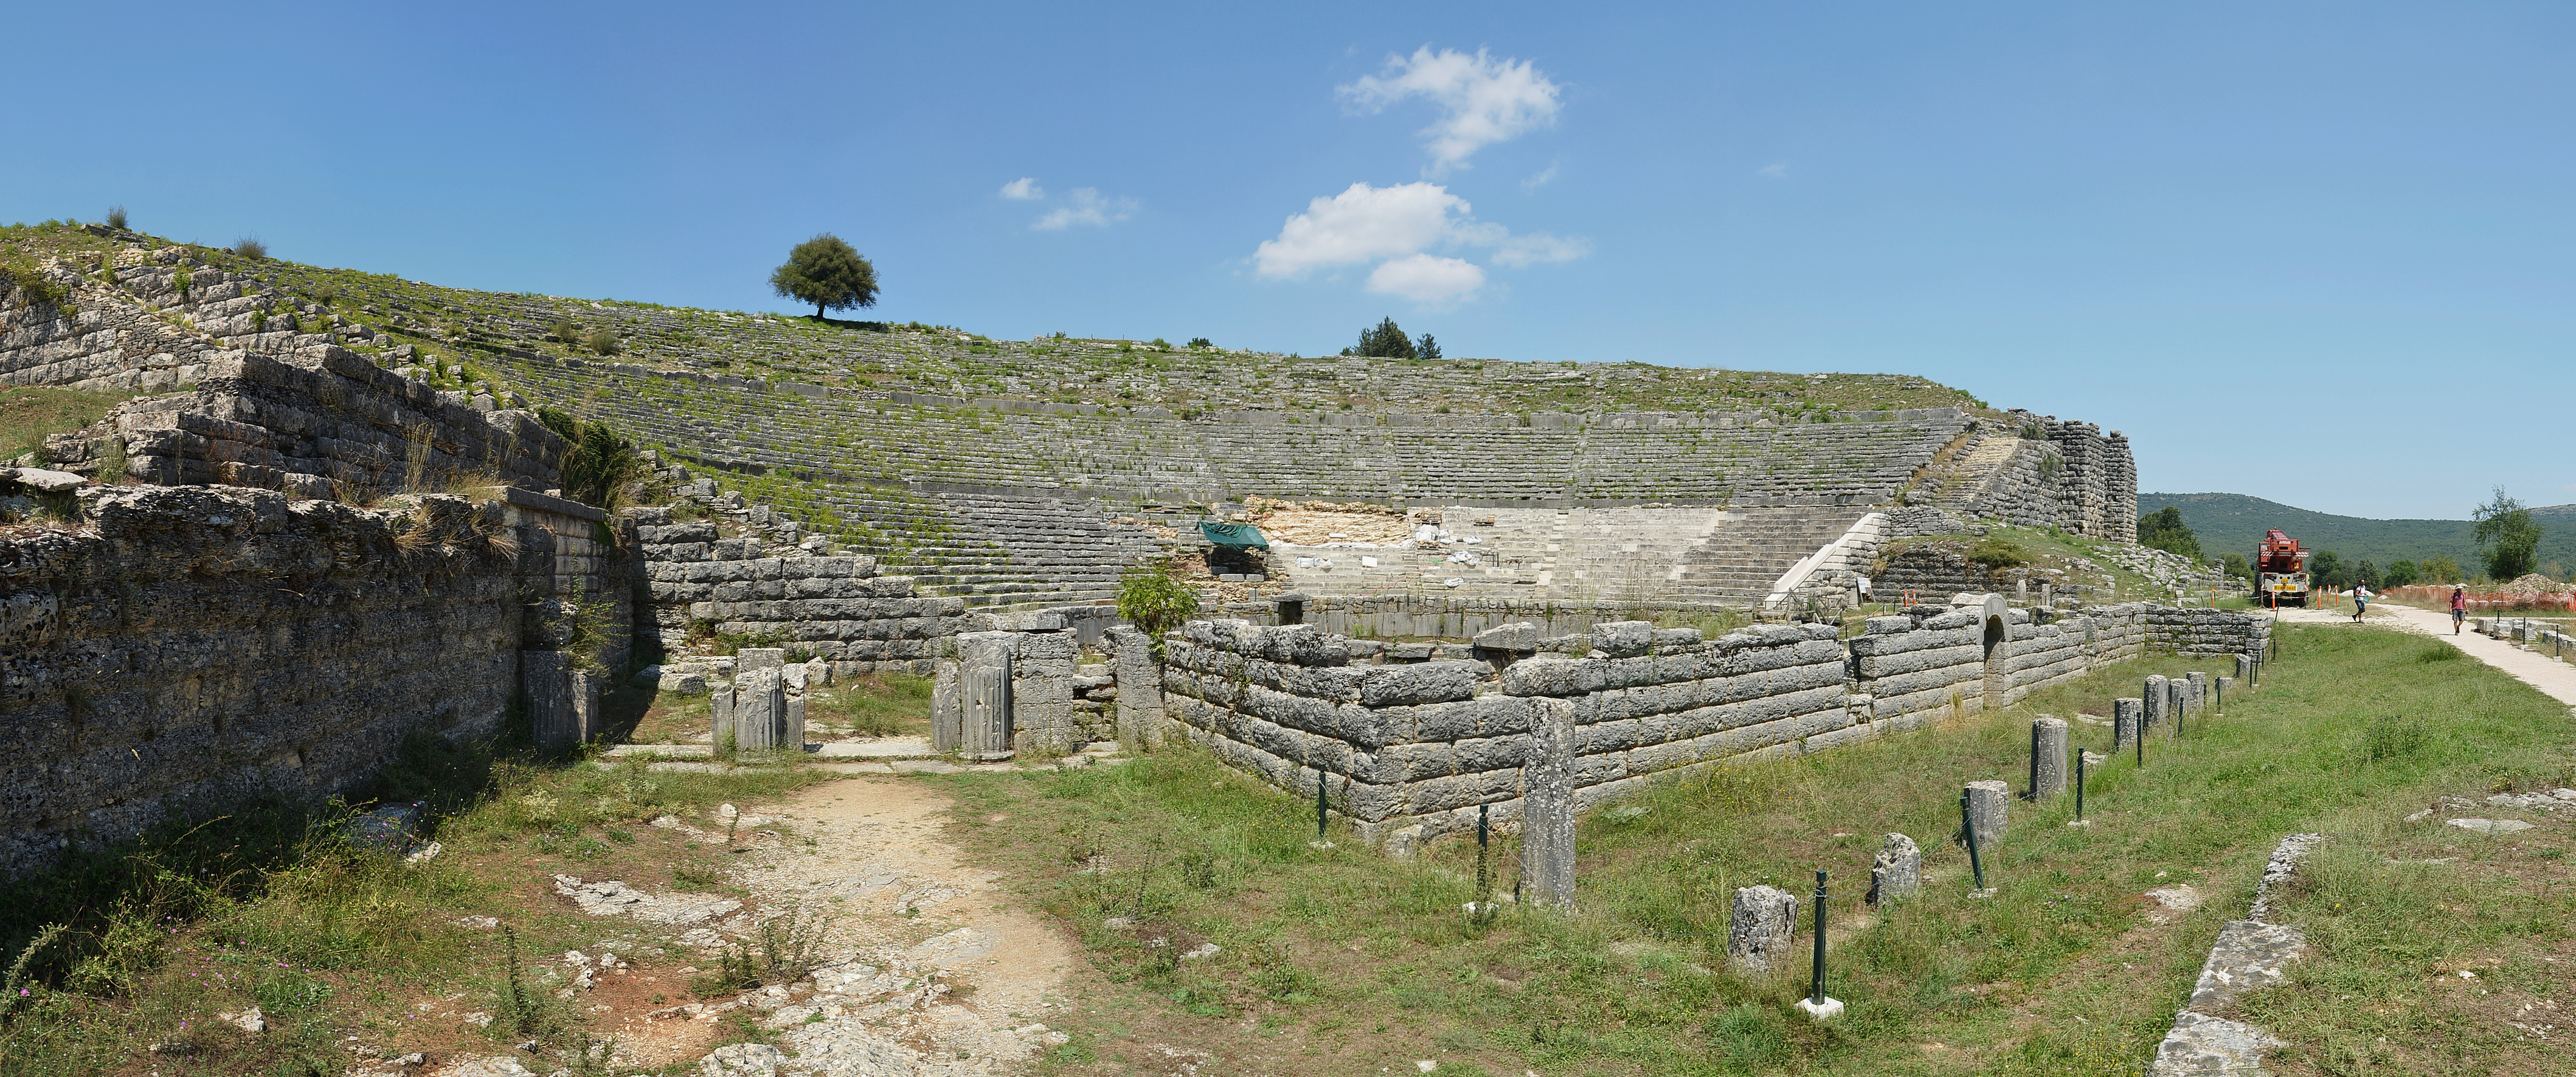 Dodona (Δωδώνη) - Ancient Greek theatre